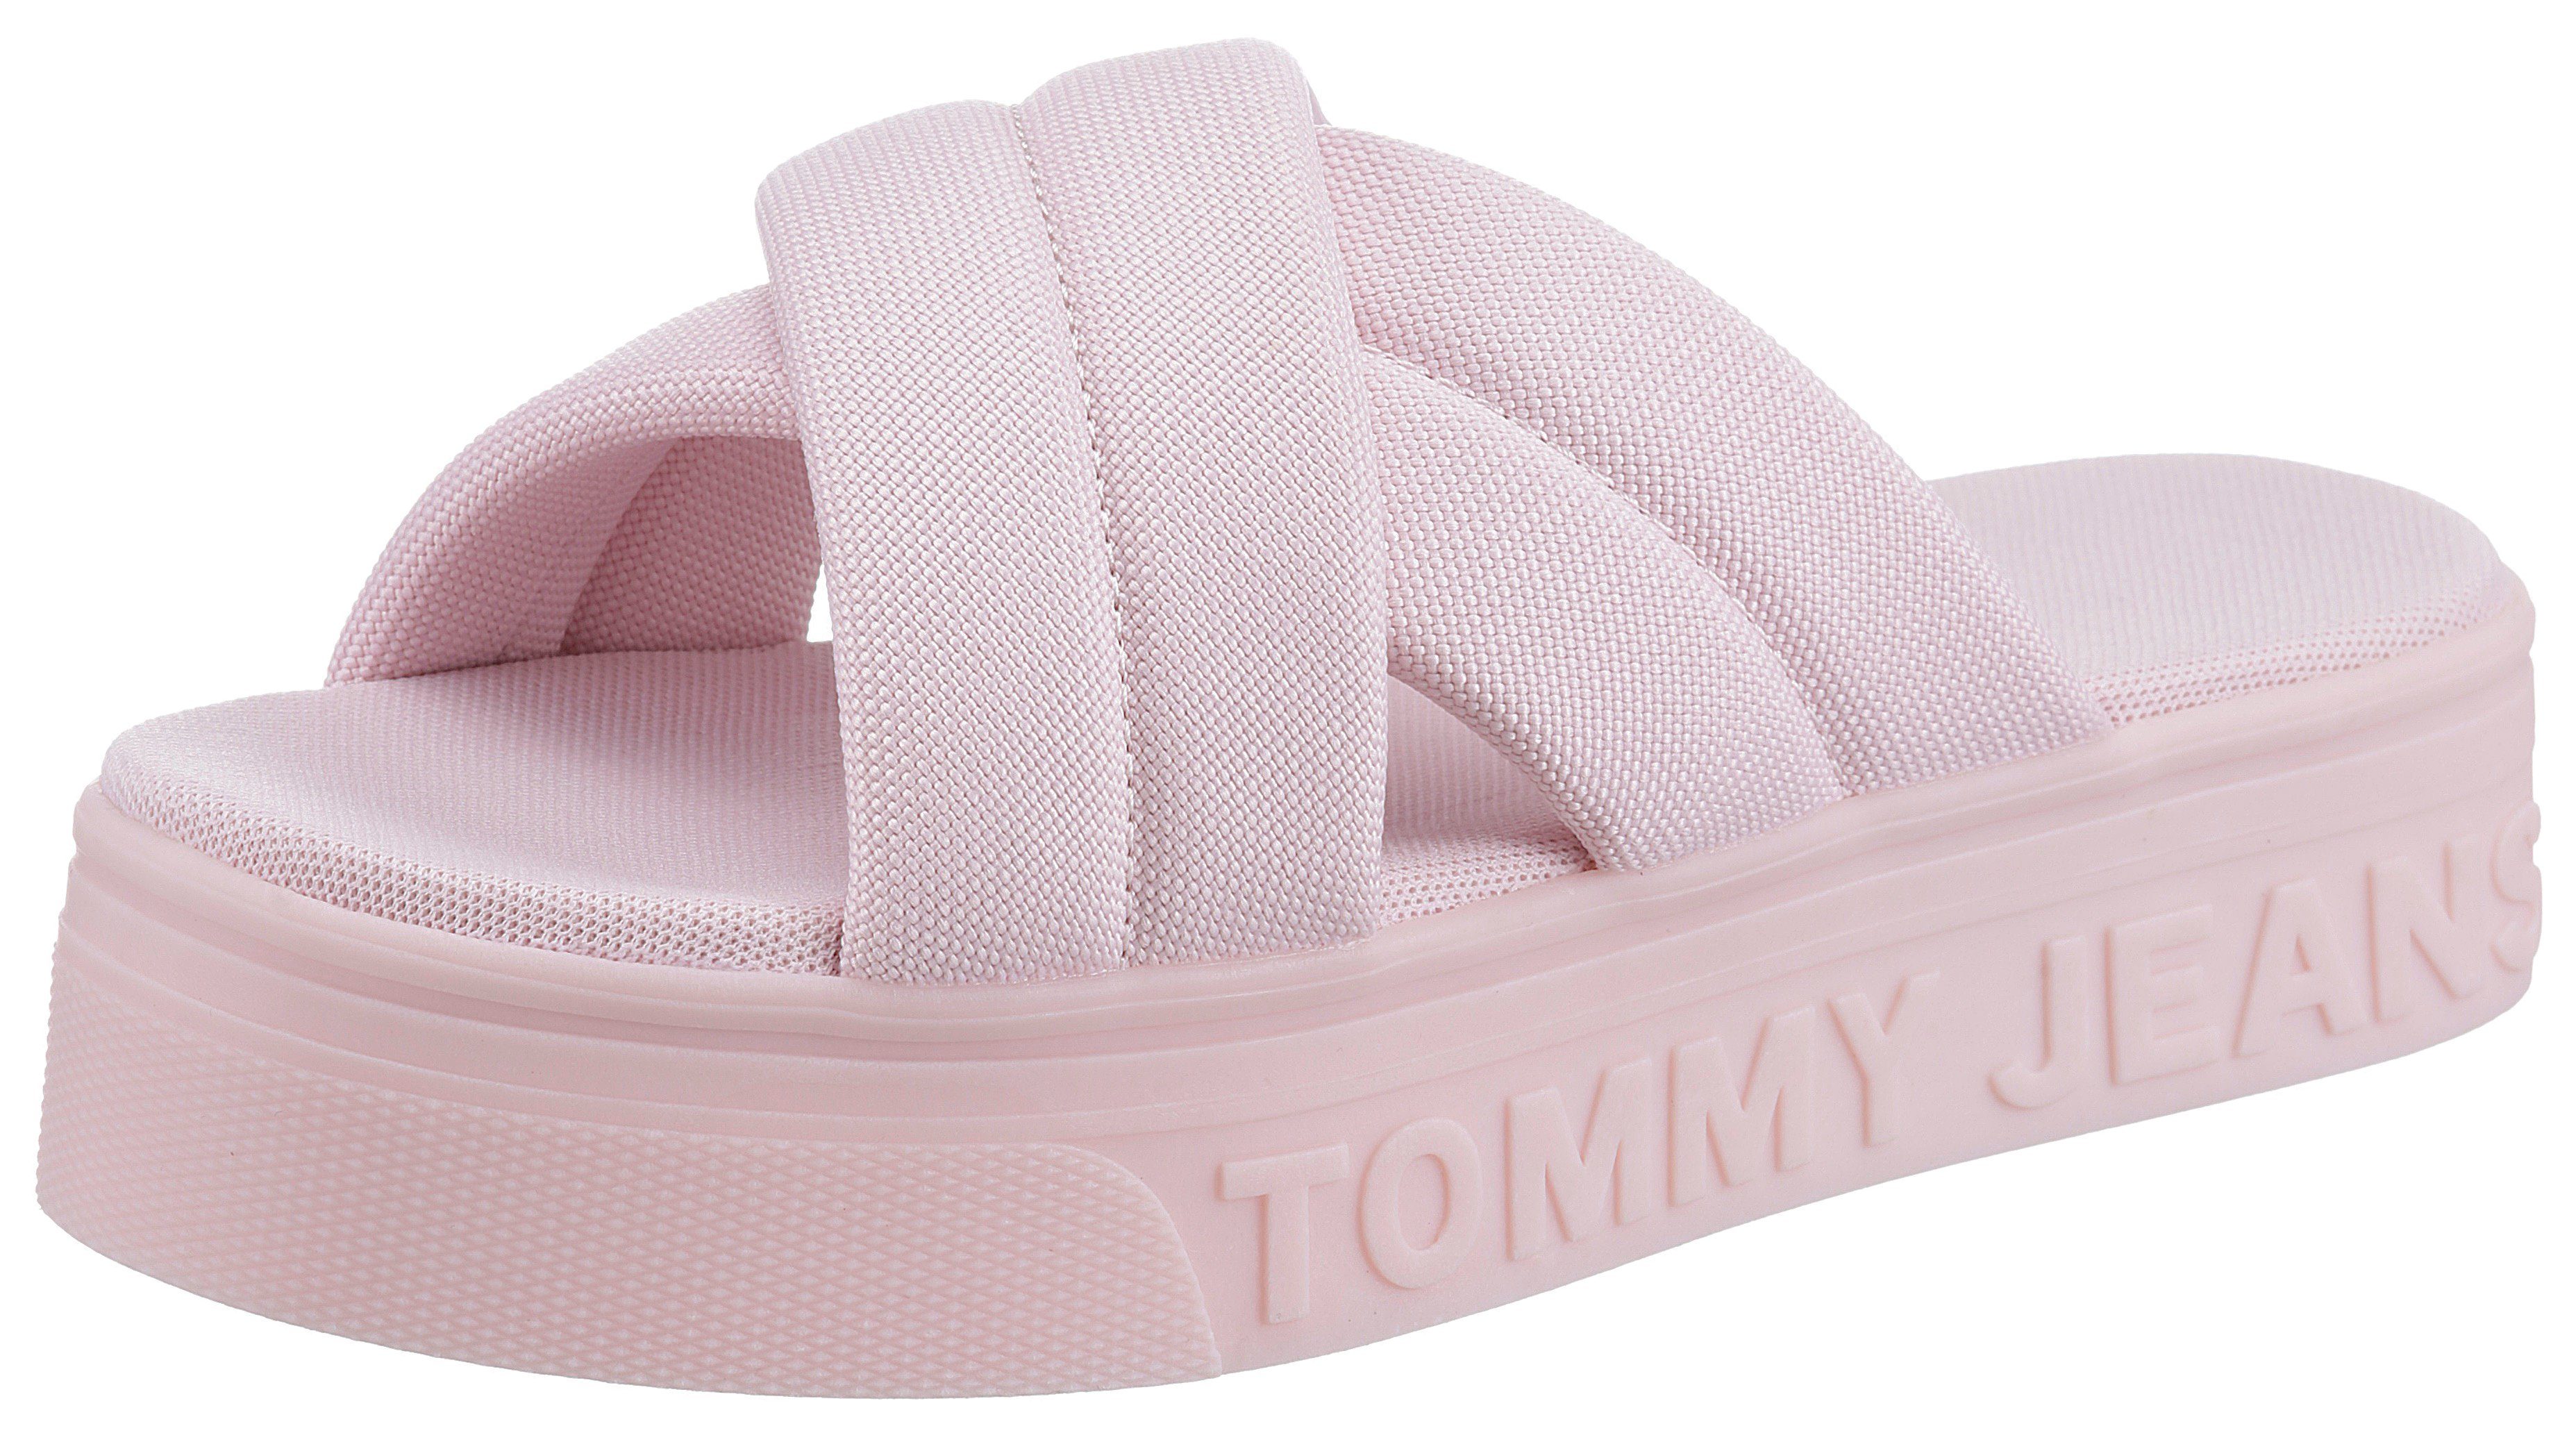 Tommy Jeans TOMMY JEANS FLTFRM SANDAL Pantolette mit wattierter Kreuzbandage rose